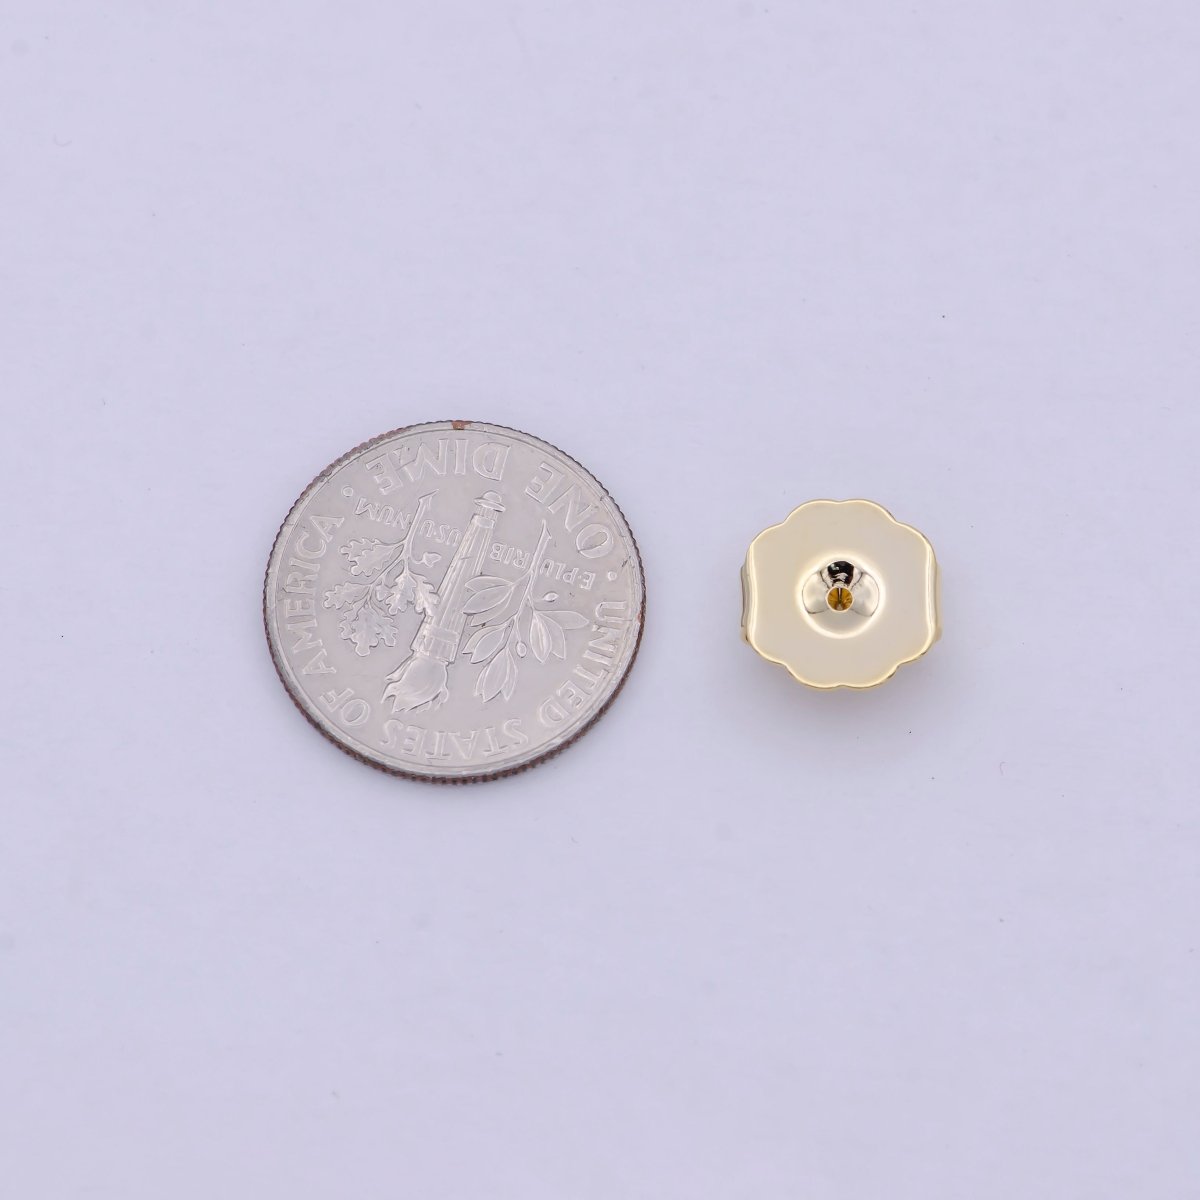 Gold Earring Backs Replacements Hypoallergenic Earring Backs for Studs, Secure Ear Locking for Stud Earrings Ear Nut for Posts, 6,9.5mm K-335, K-576 - DLUXCA